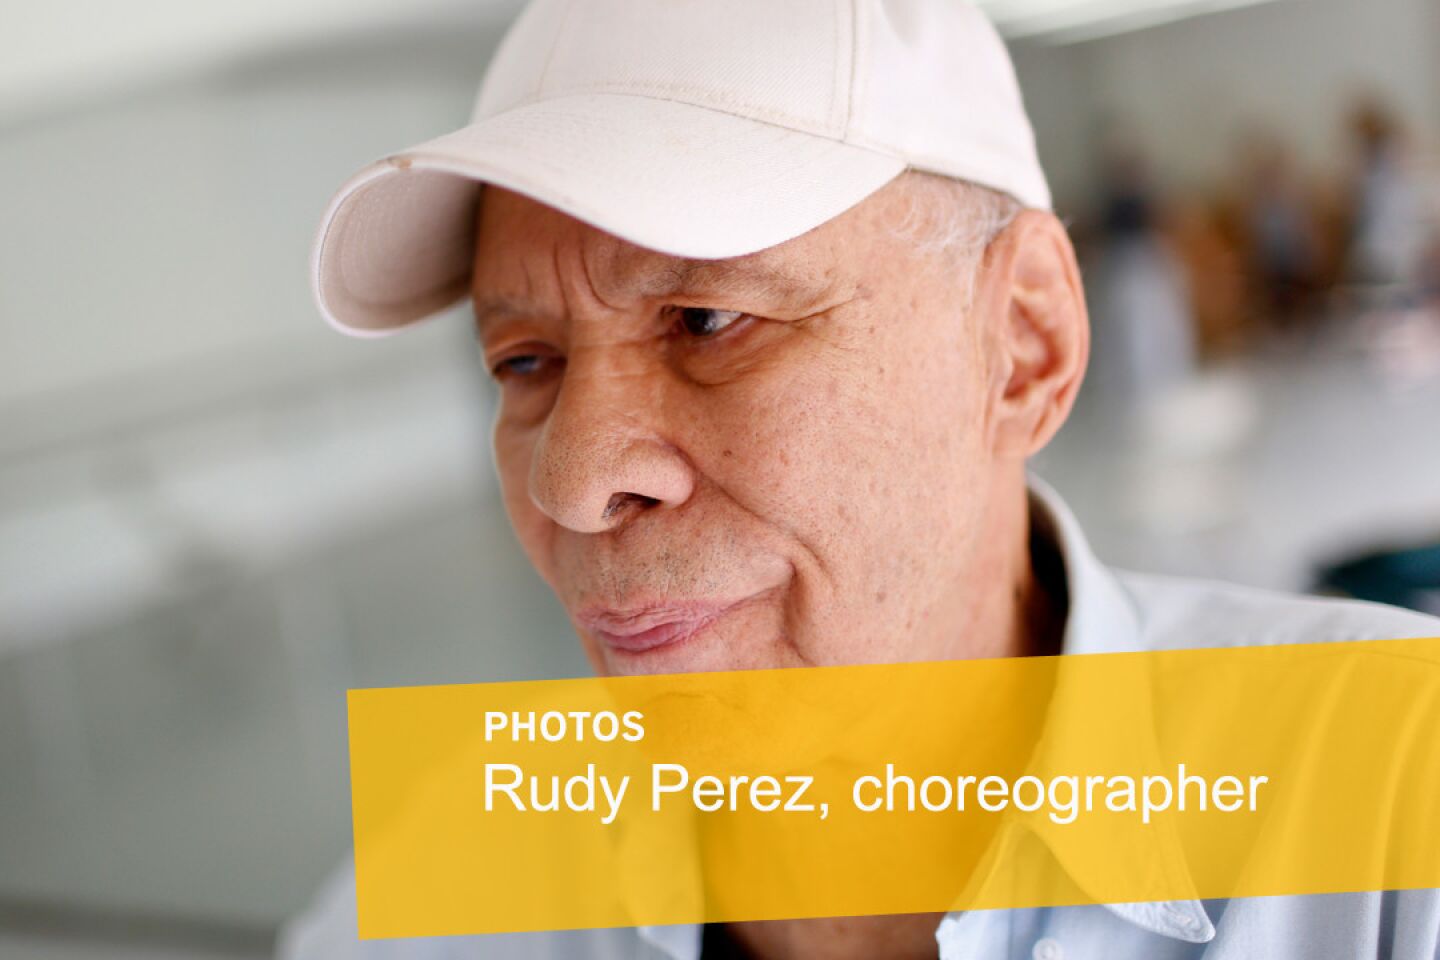 Rudy Perez, choreographer